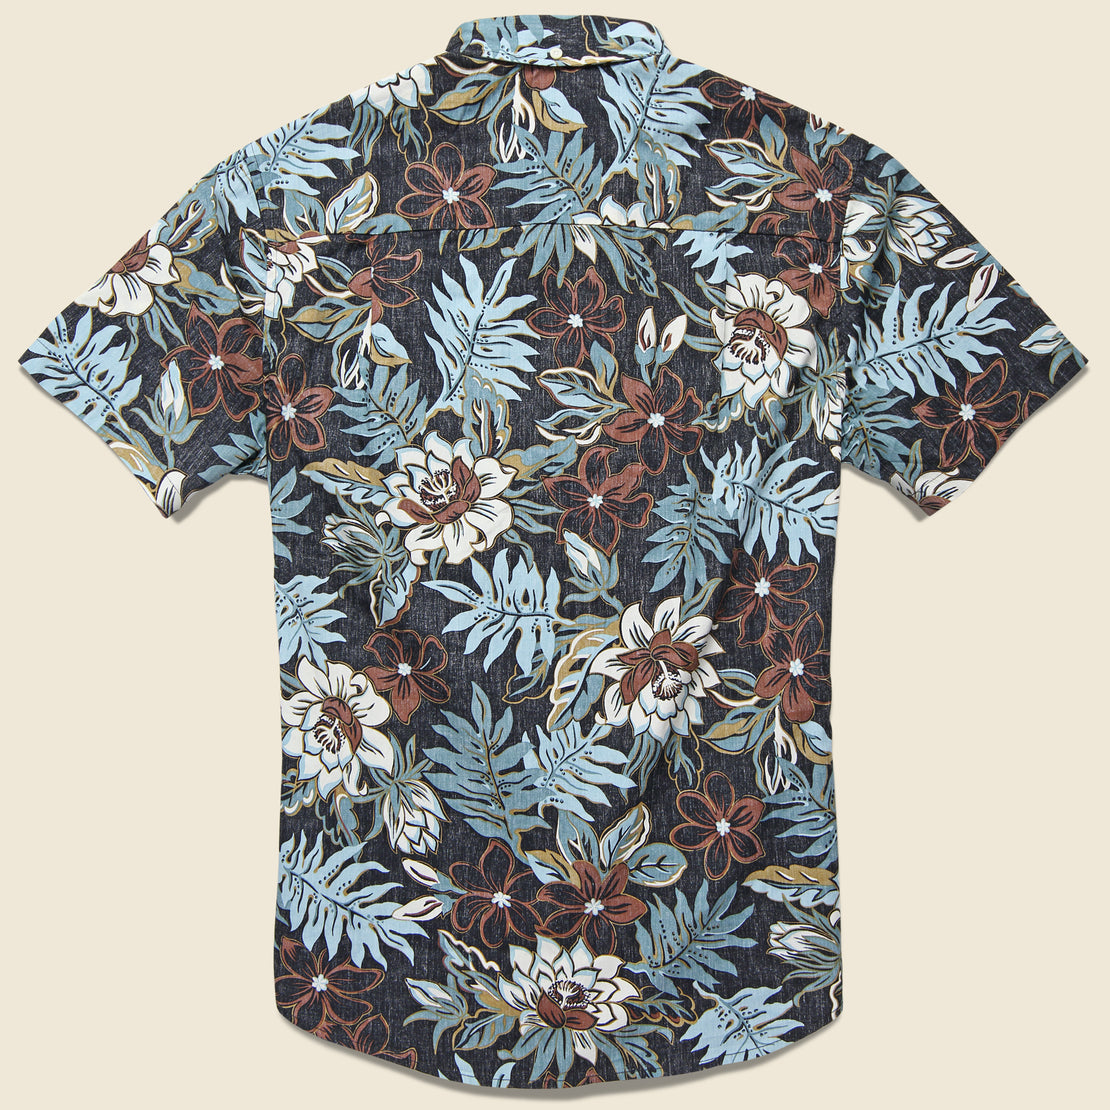 Vintage Hawaiian Floral Shirt - Black